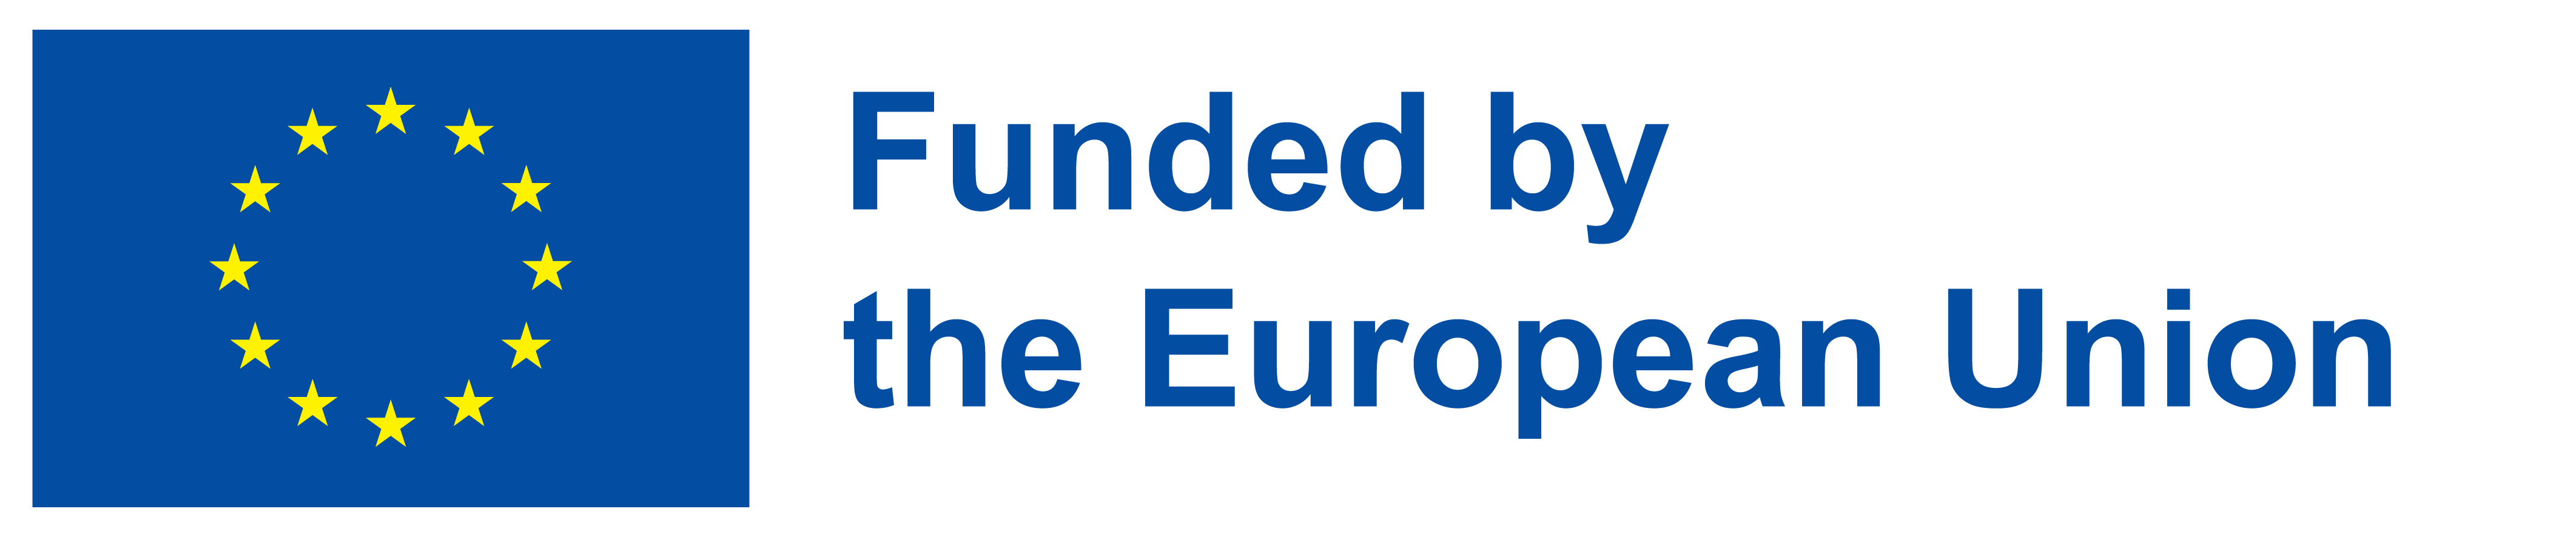 eu-funded emblem